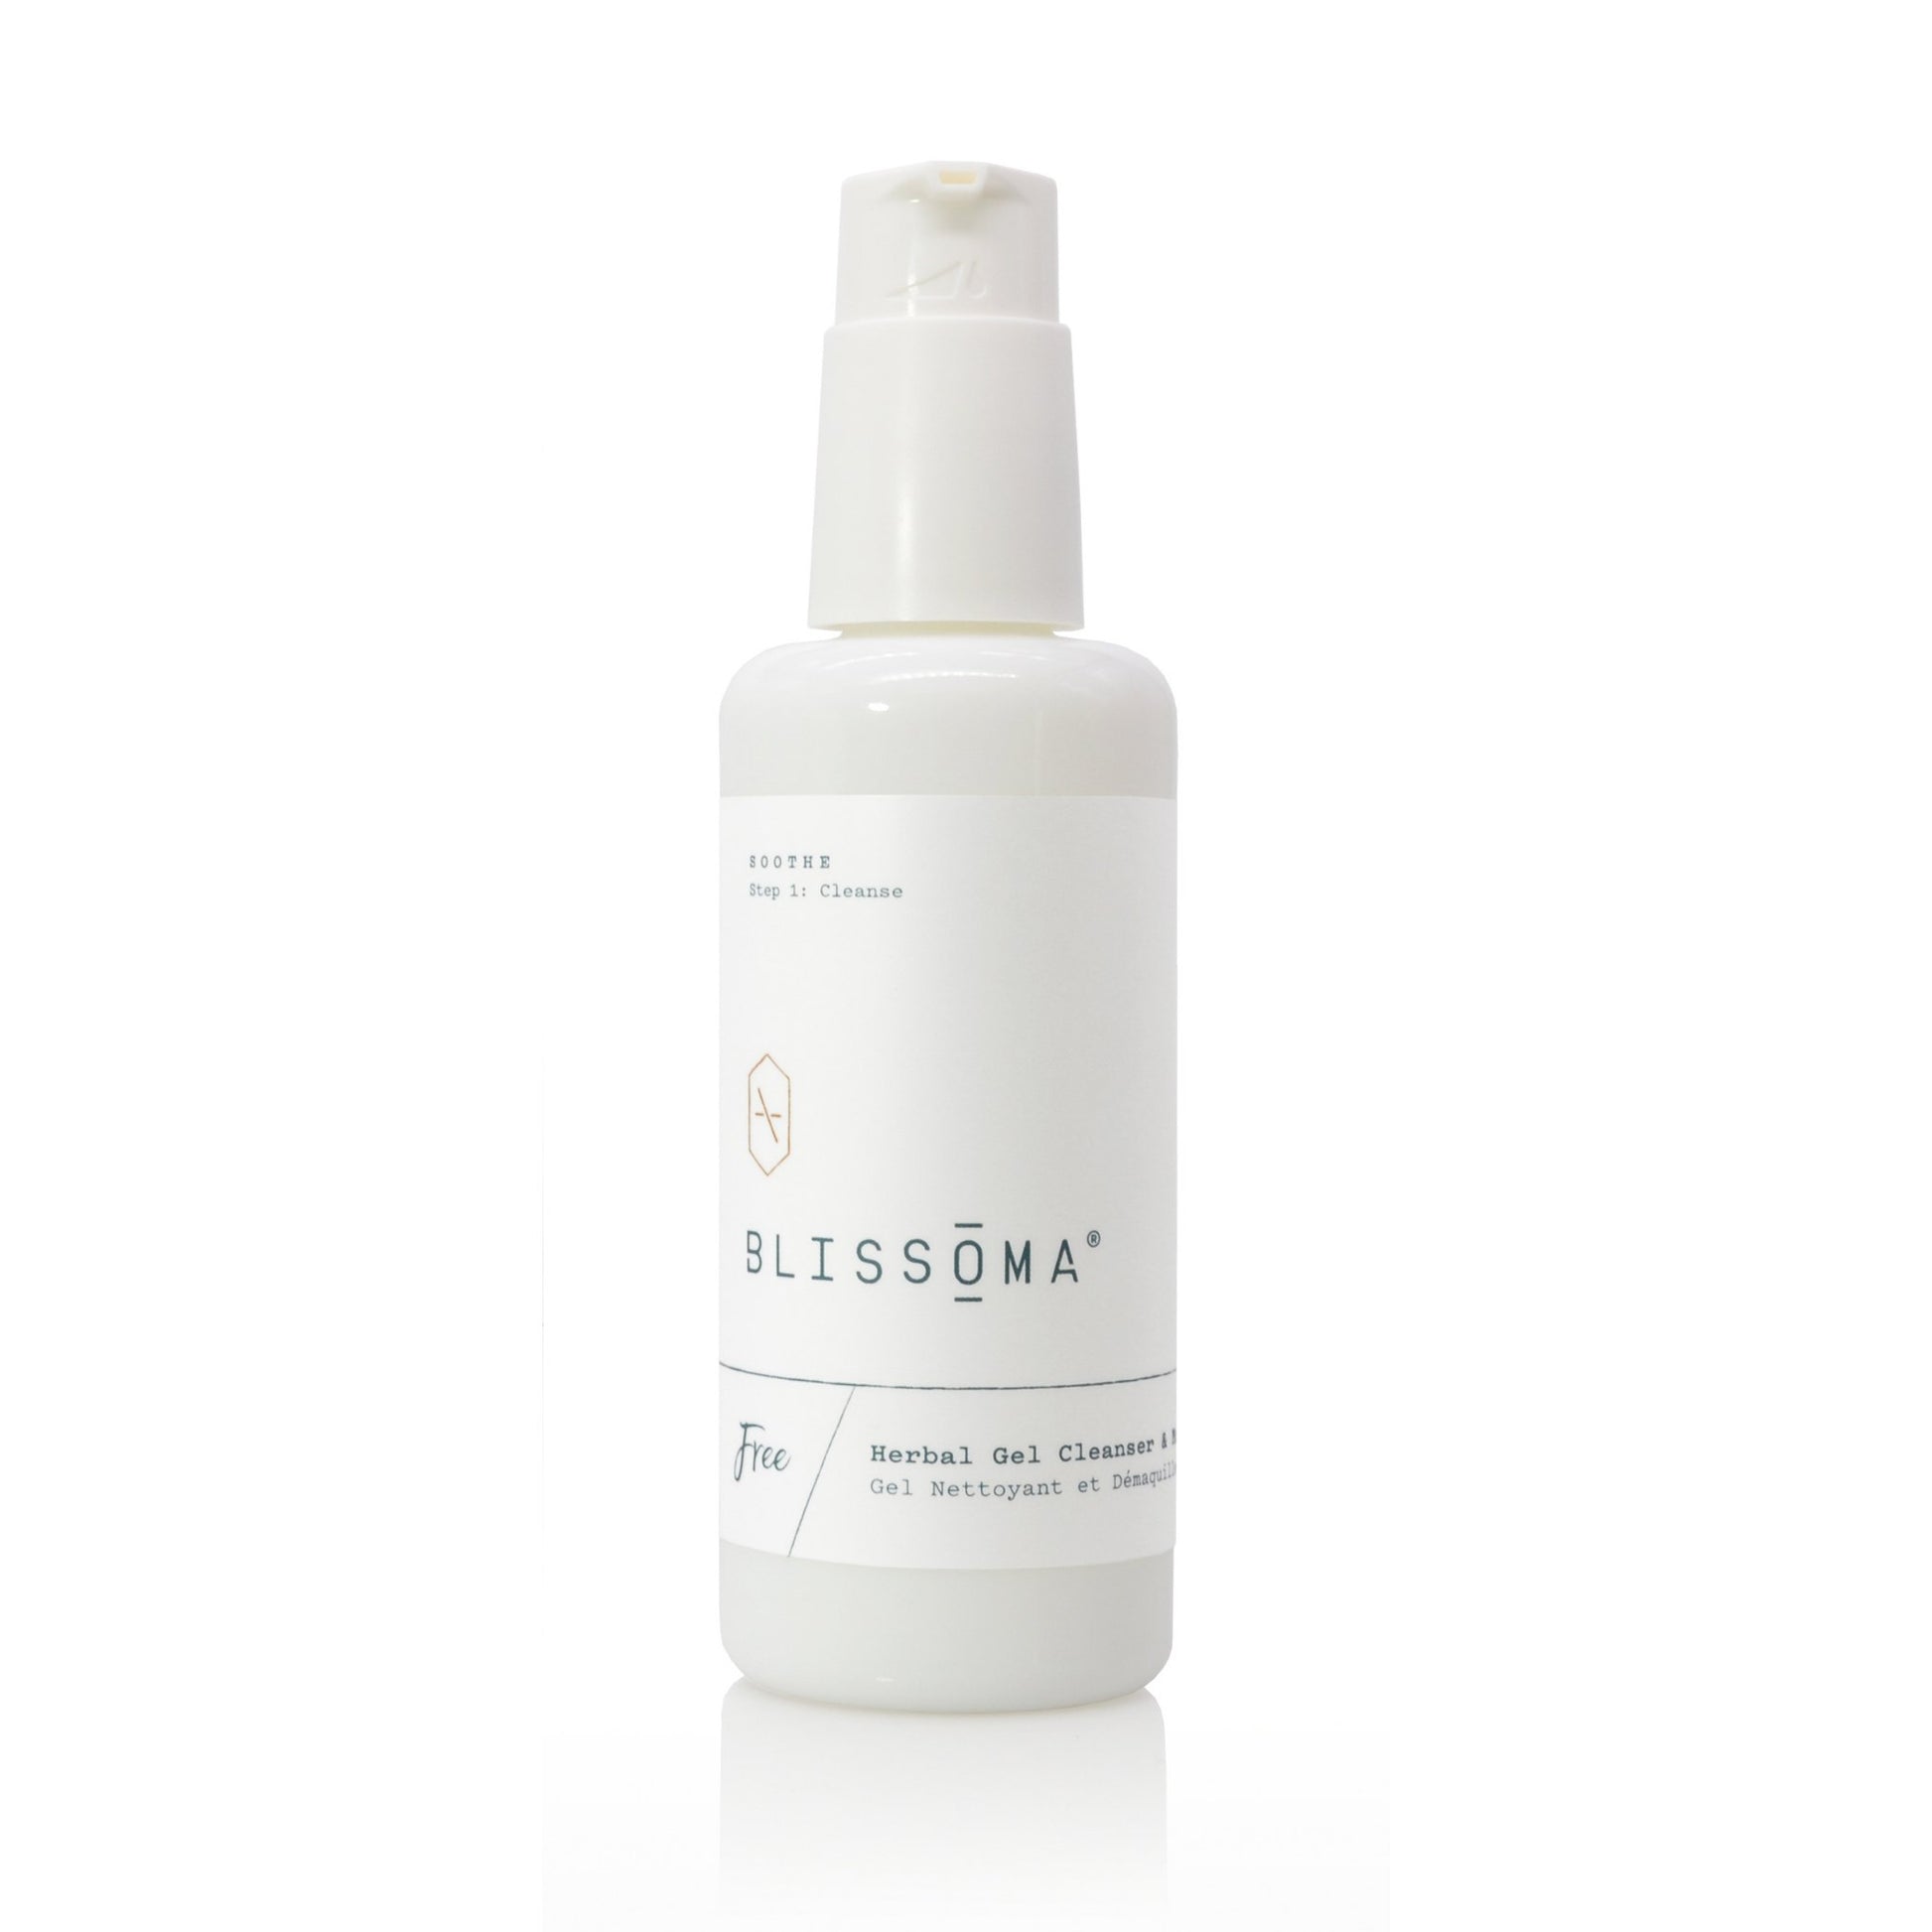 Blissoma - Blissoma Free Rejuvenating Herbal Gel Cleanser + Makeup Remover - ORESTA clean beauty simplified